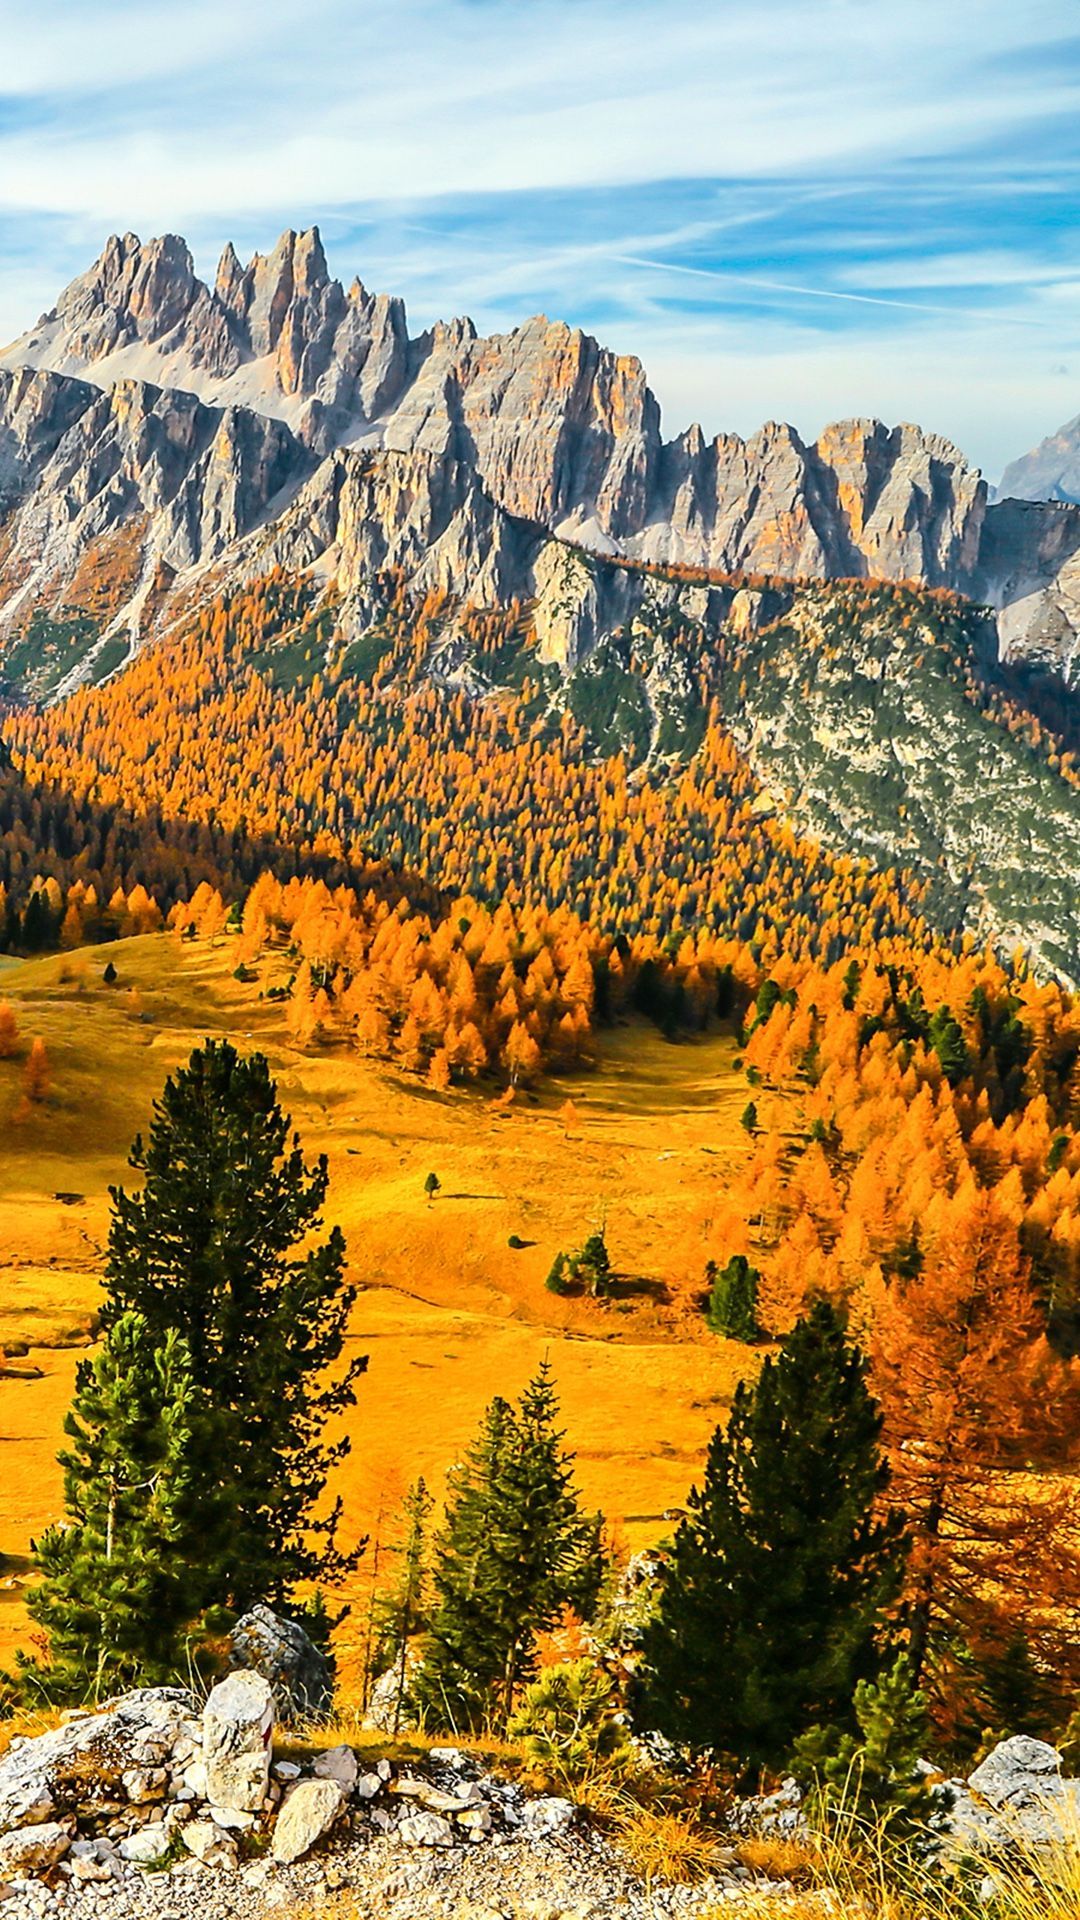 Autumn mountains wallpaper. Mountain wallpaper, Fall picture, Nature wallpaper